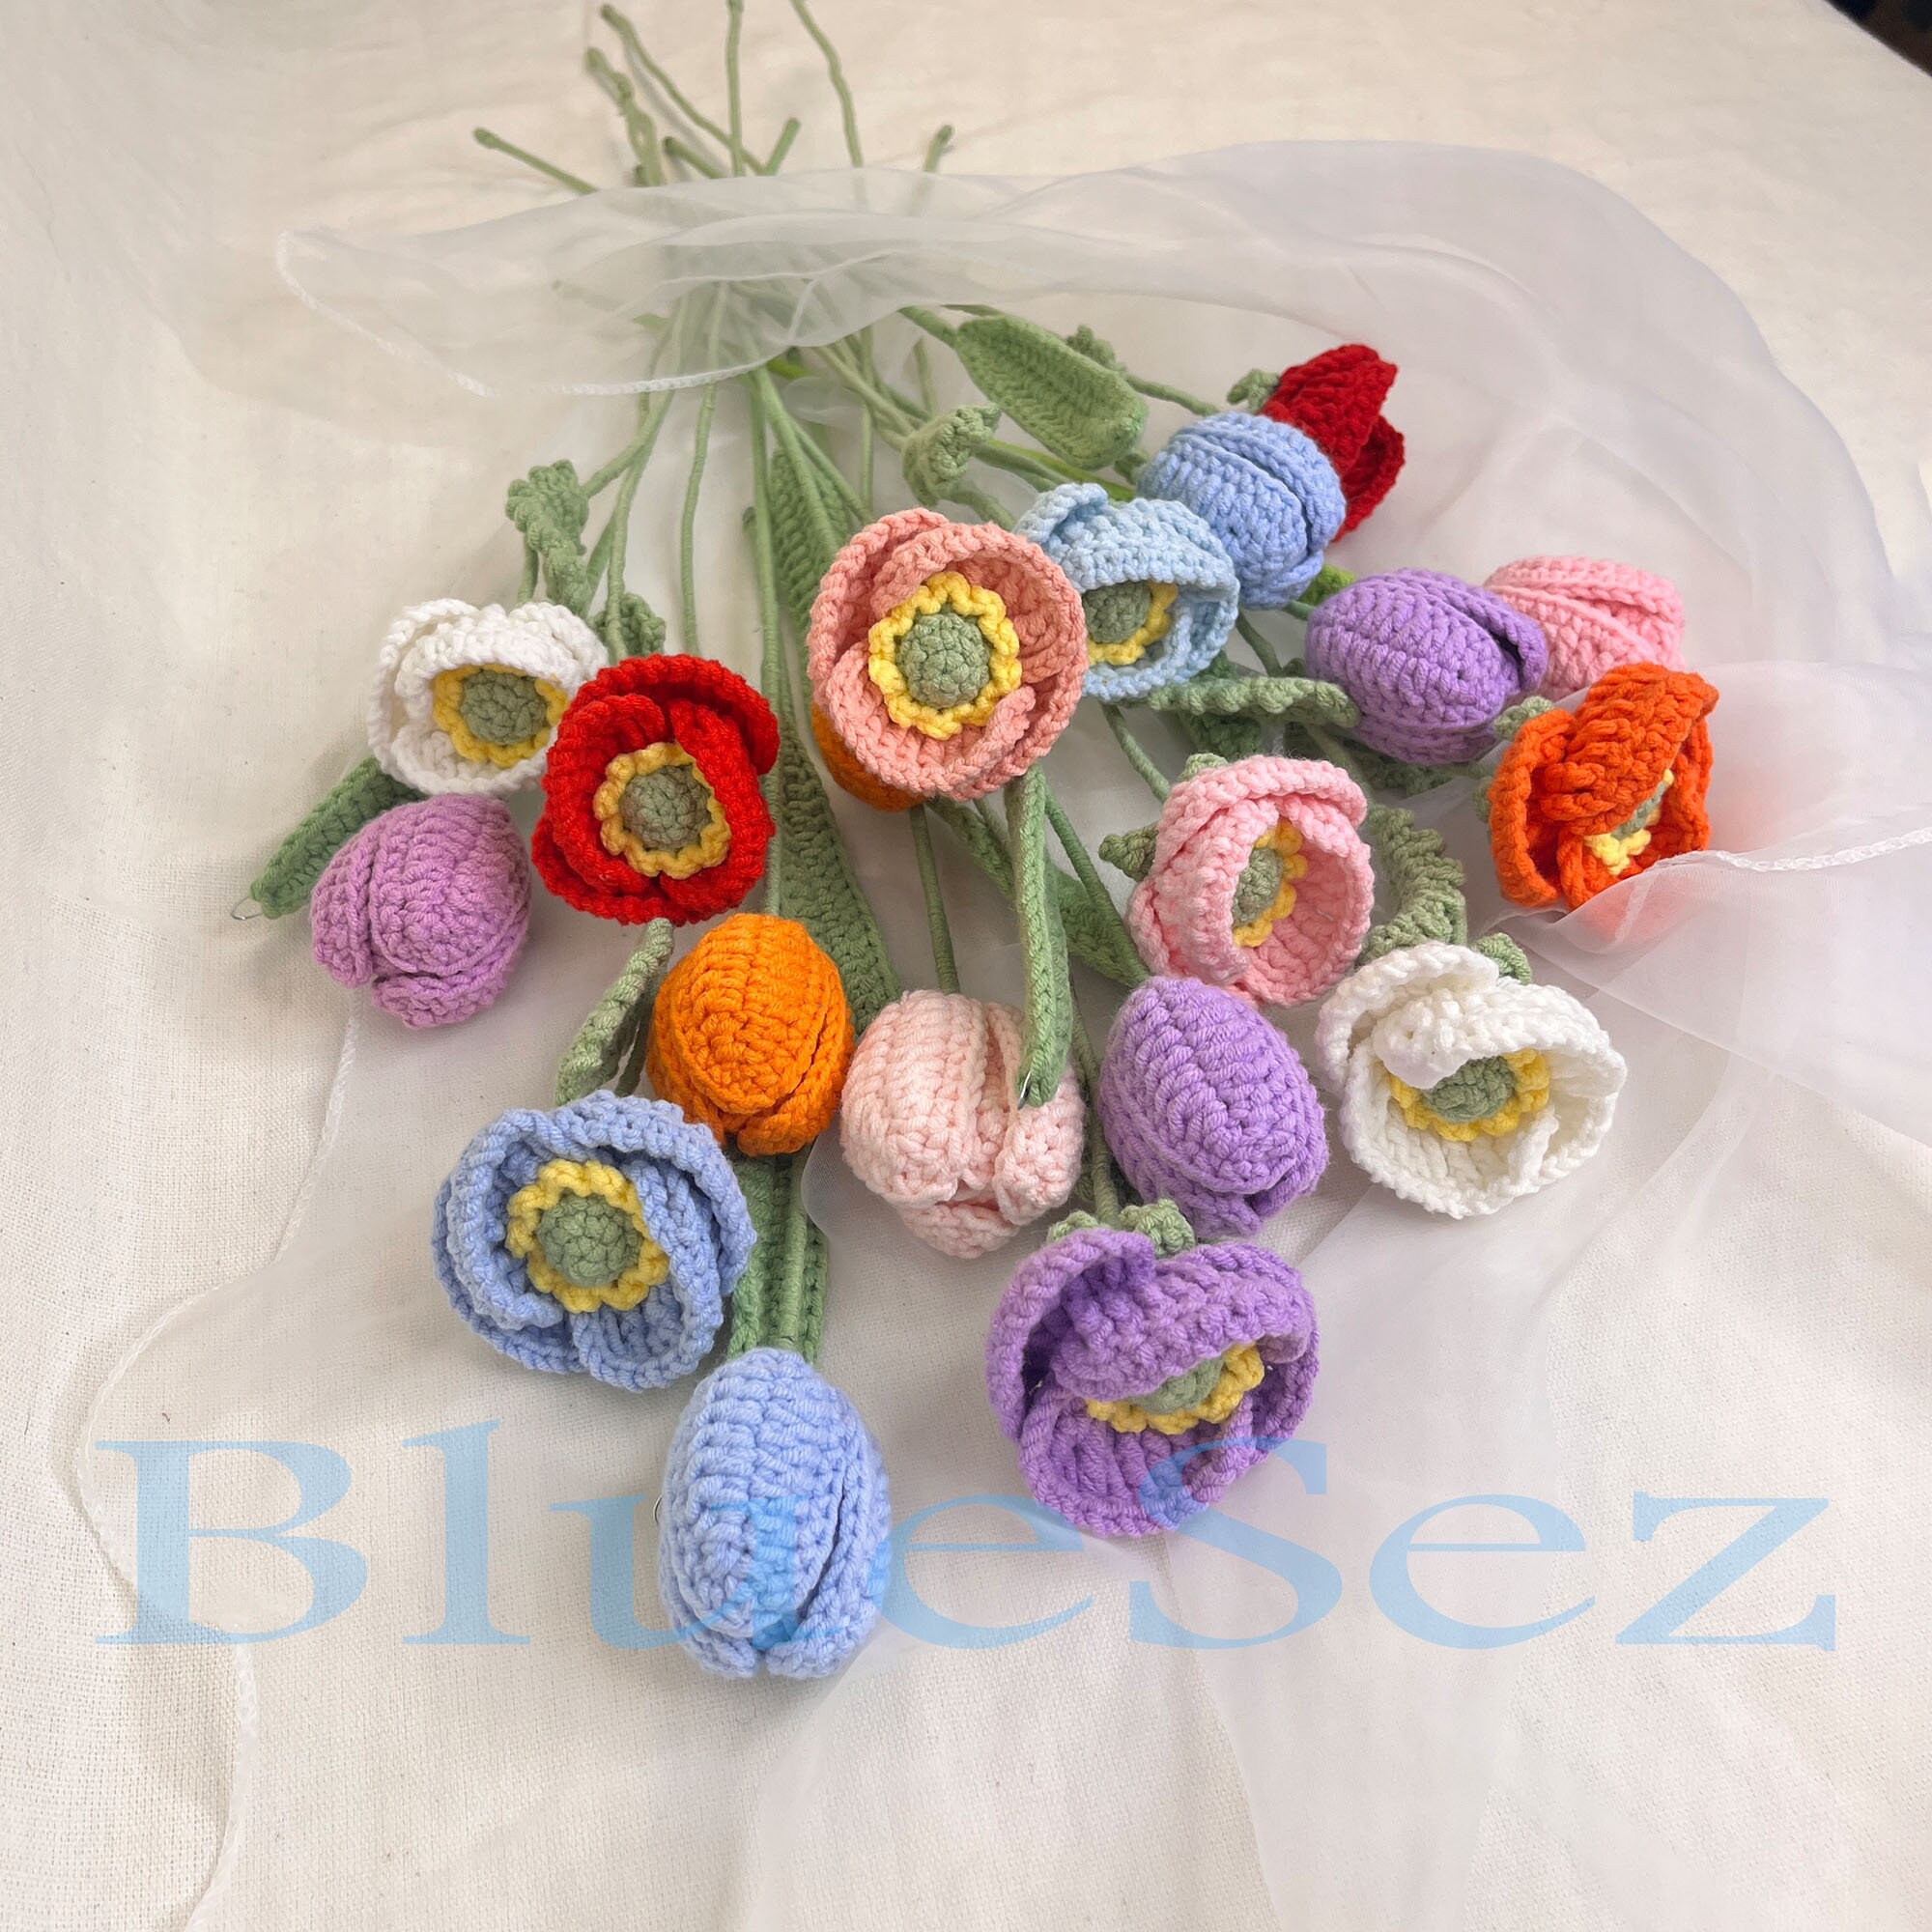 Mewaii® Crochet Tulip Kit Crochet Knitted Flowers Kits with Easy